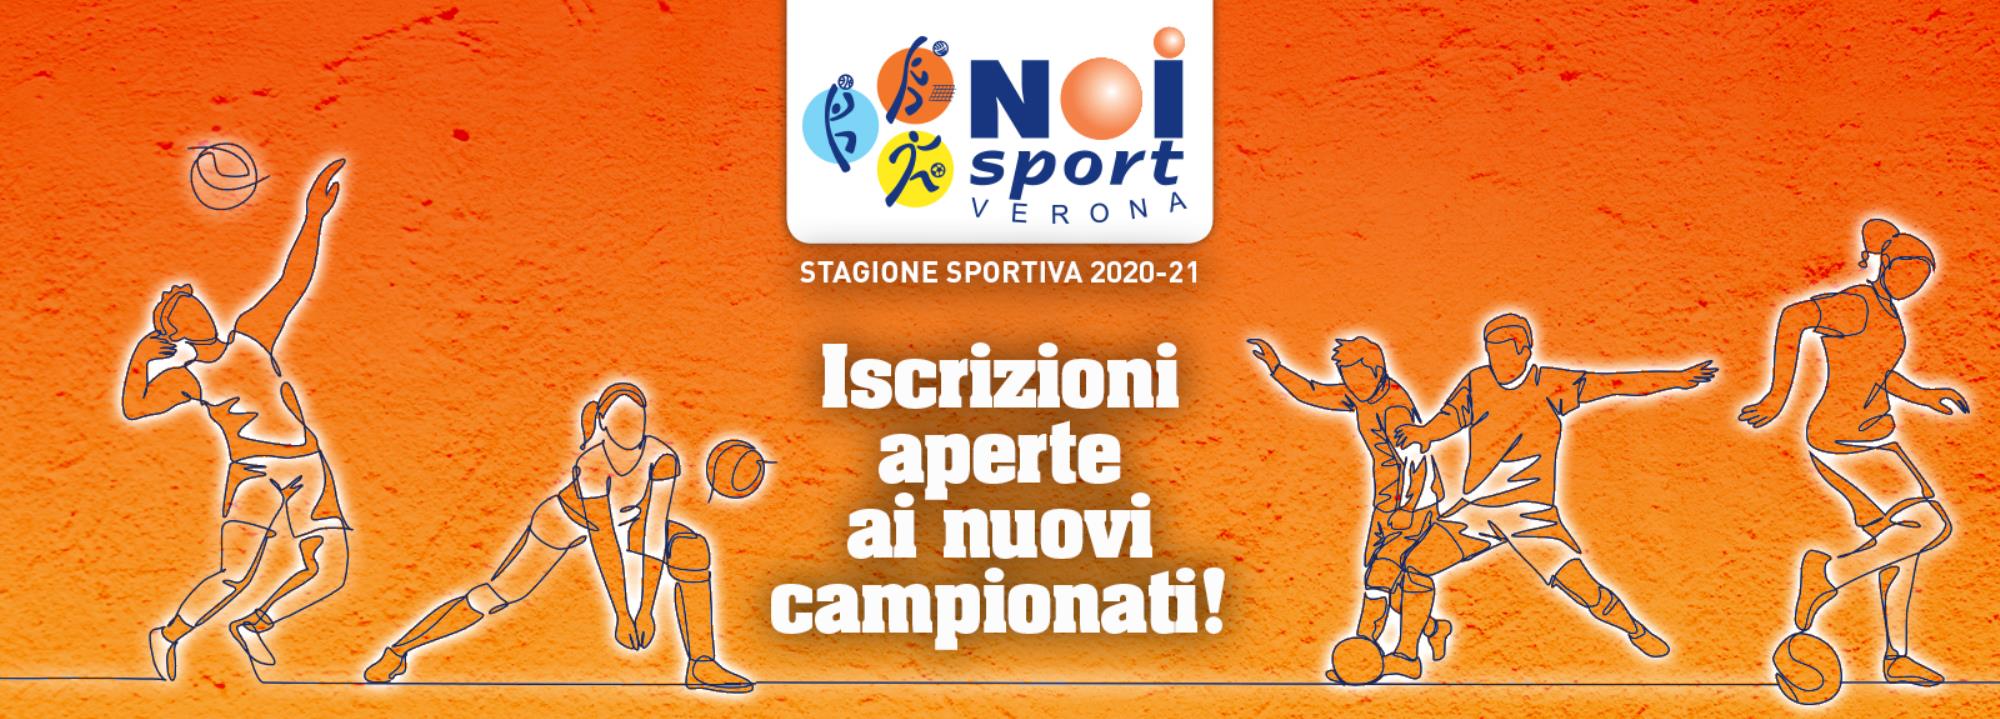 NOI Sport Verona Campionati 2020/2021